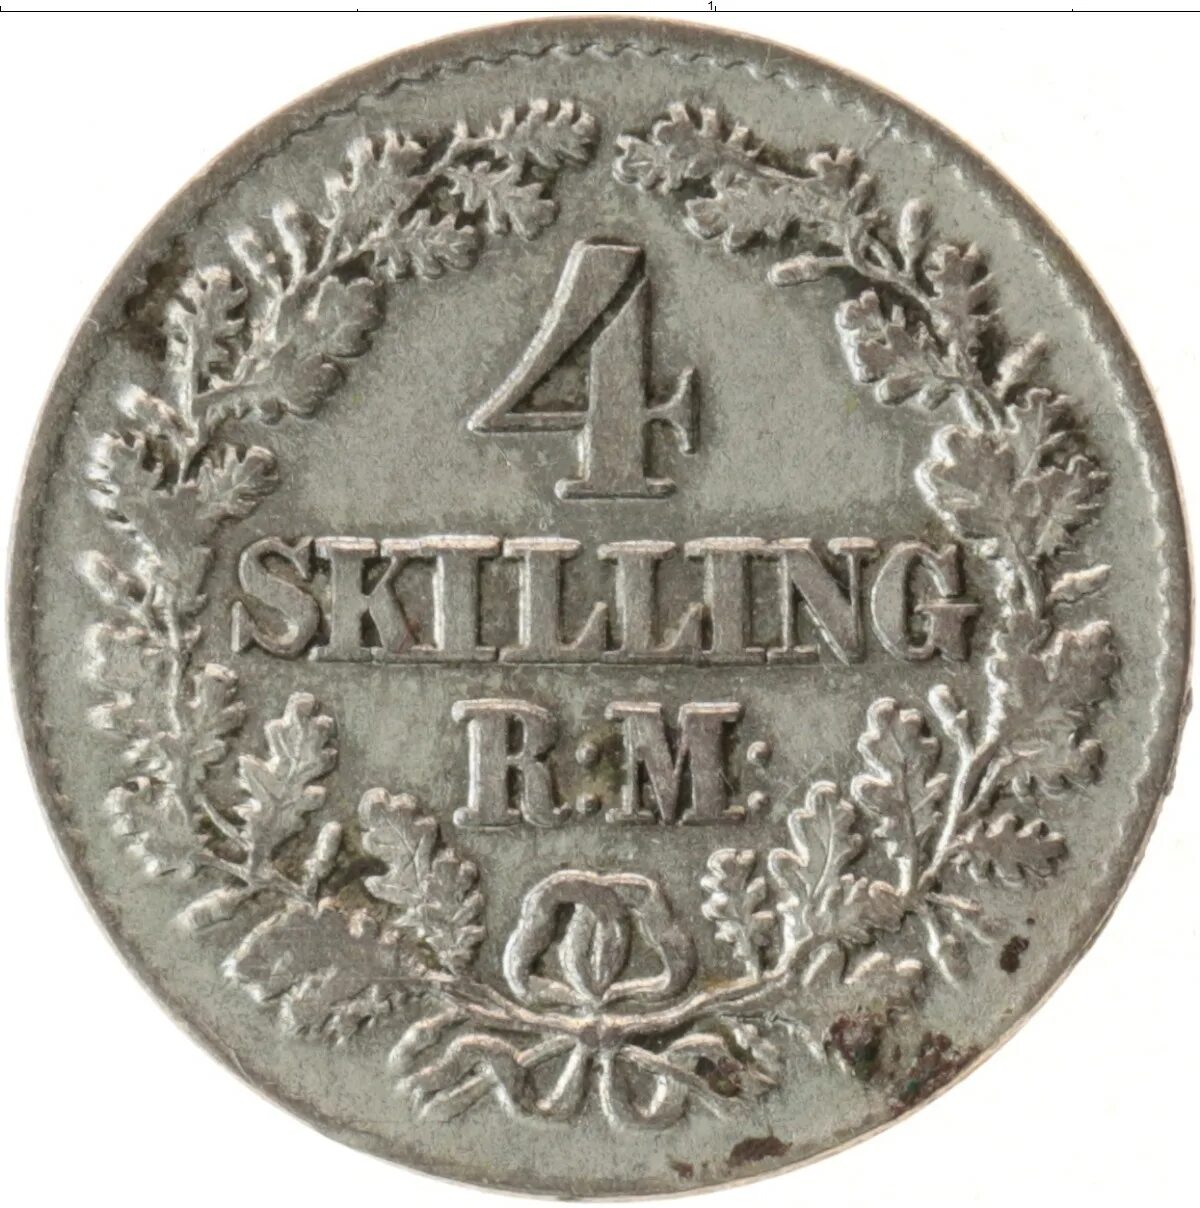 Серебряная монета 4. Дания - скиллинг 1856. Монета 1856. Монета скиллинг. Монеты Дании серебро.